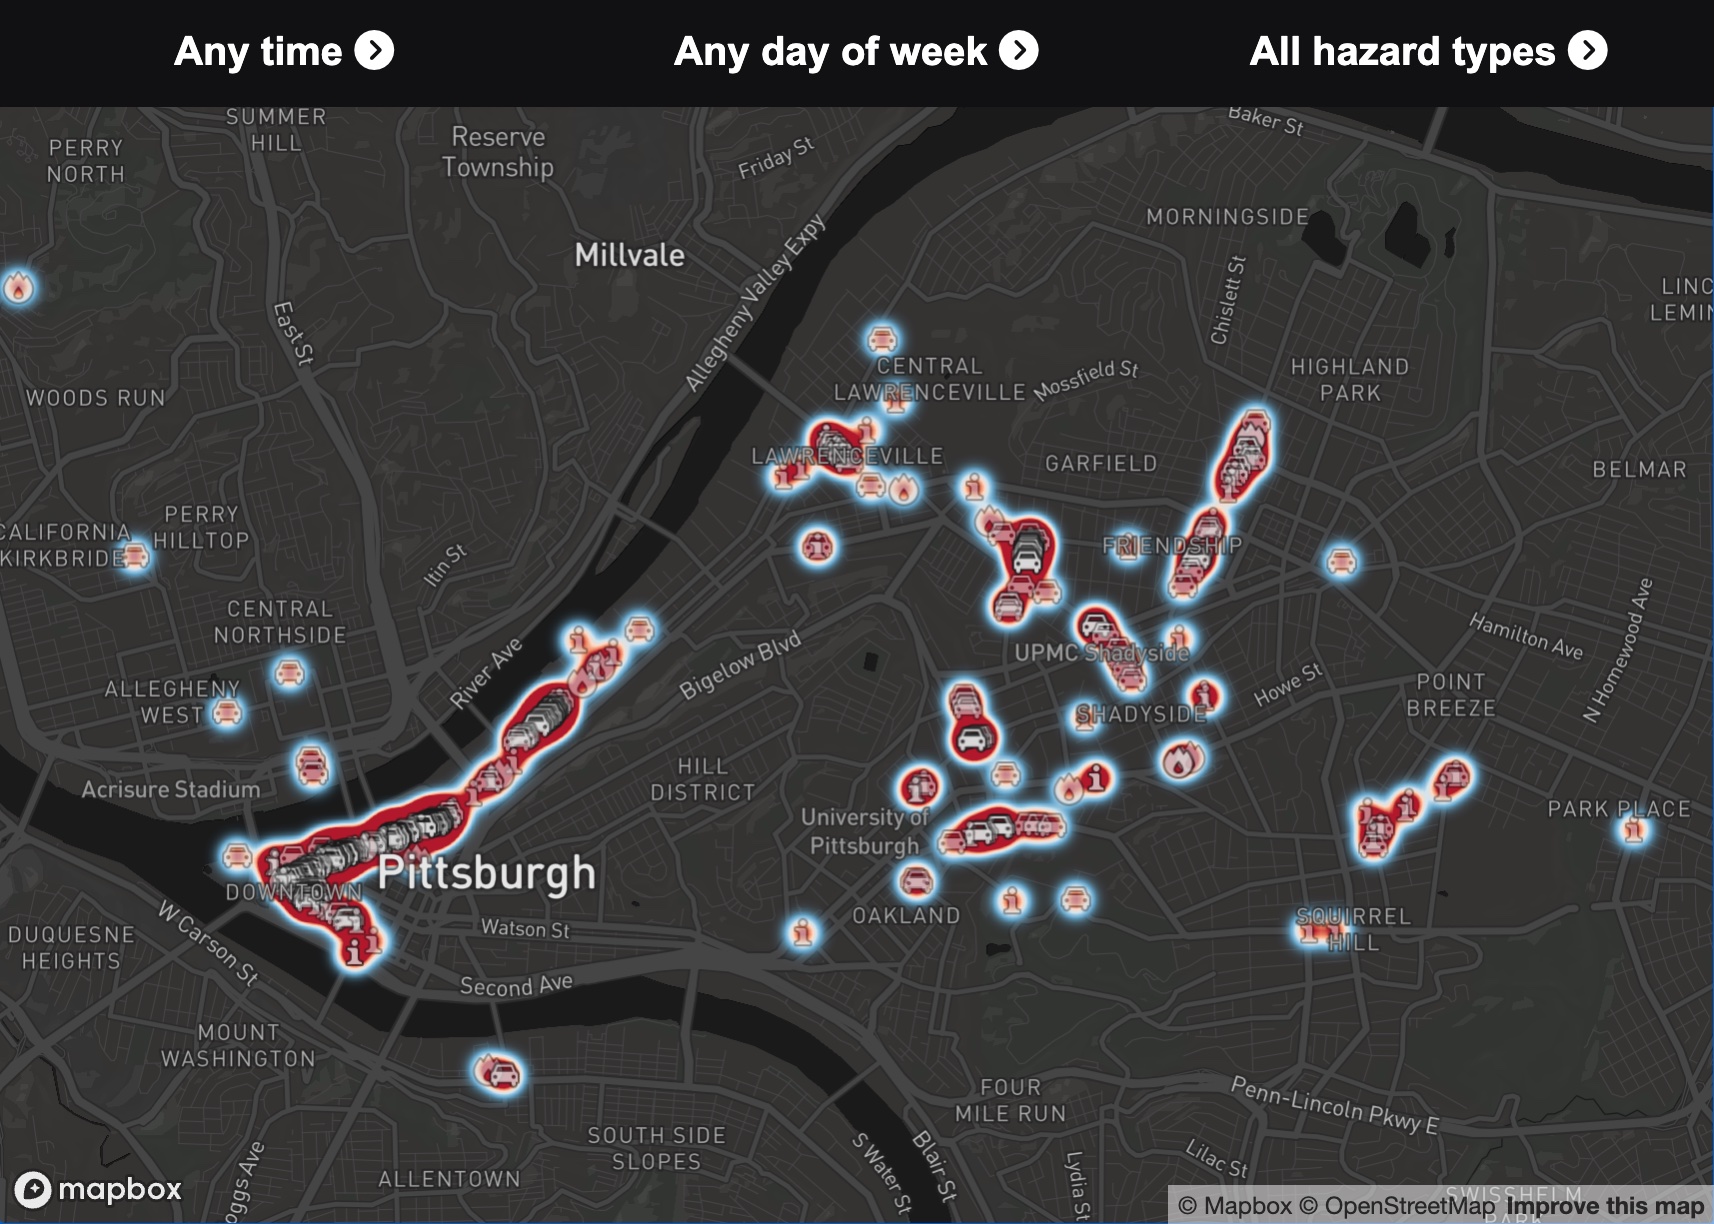 Screenshot of the Hazard Map